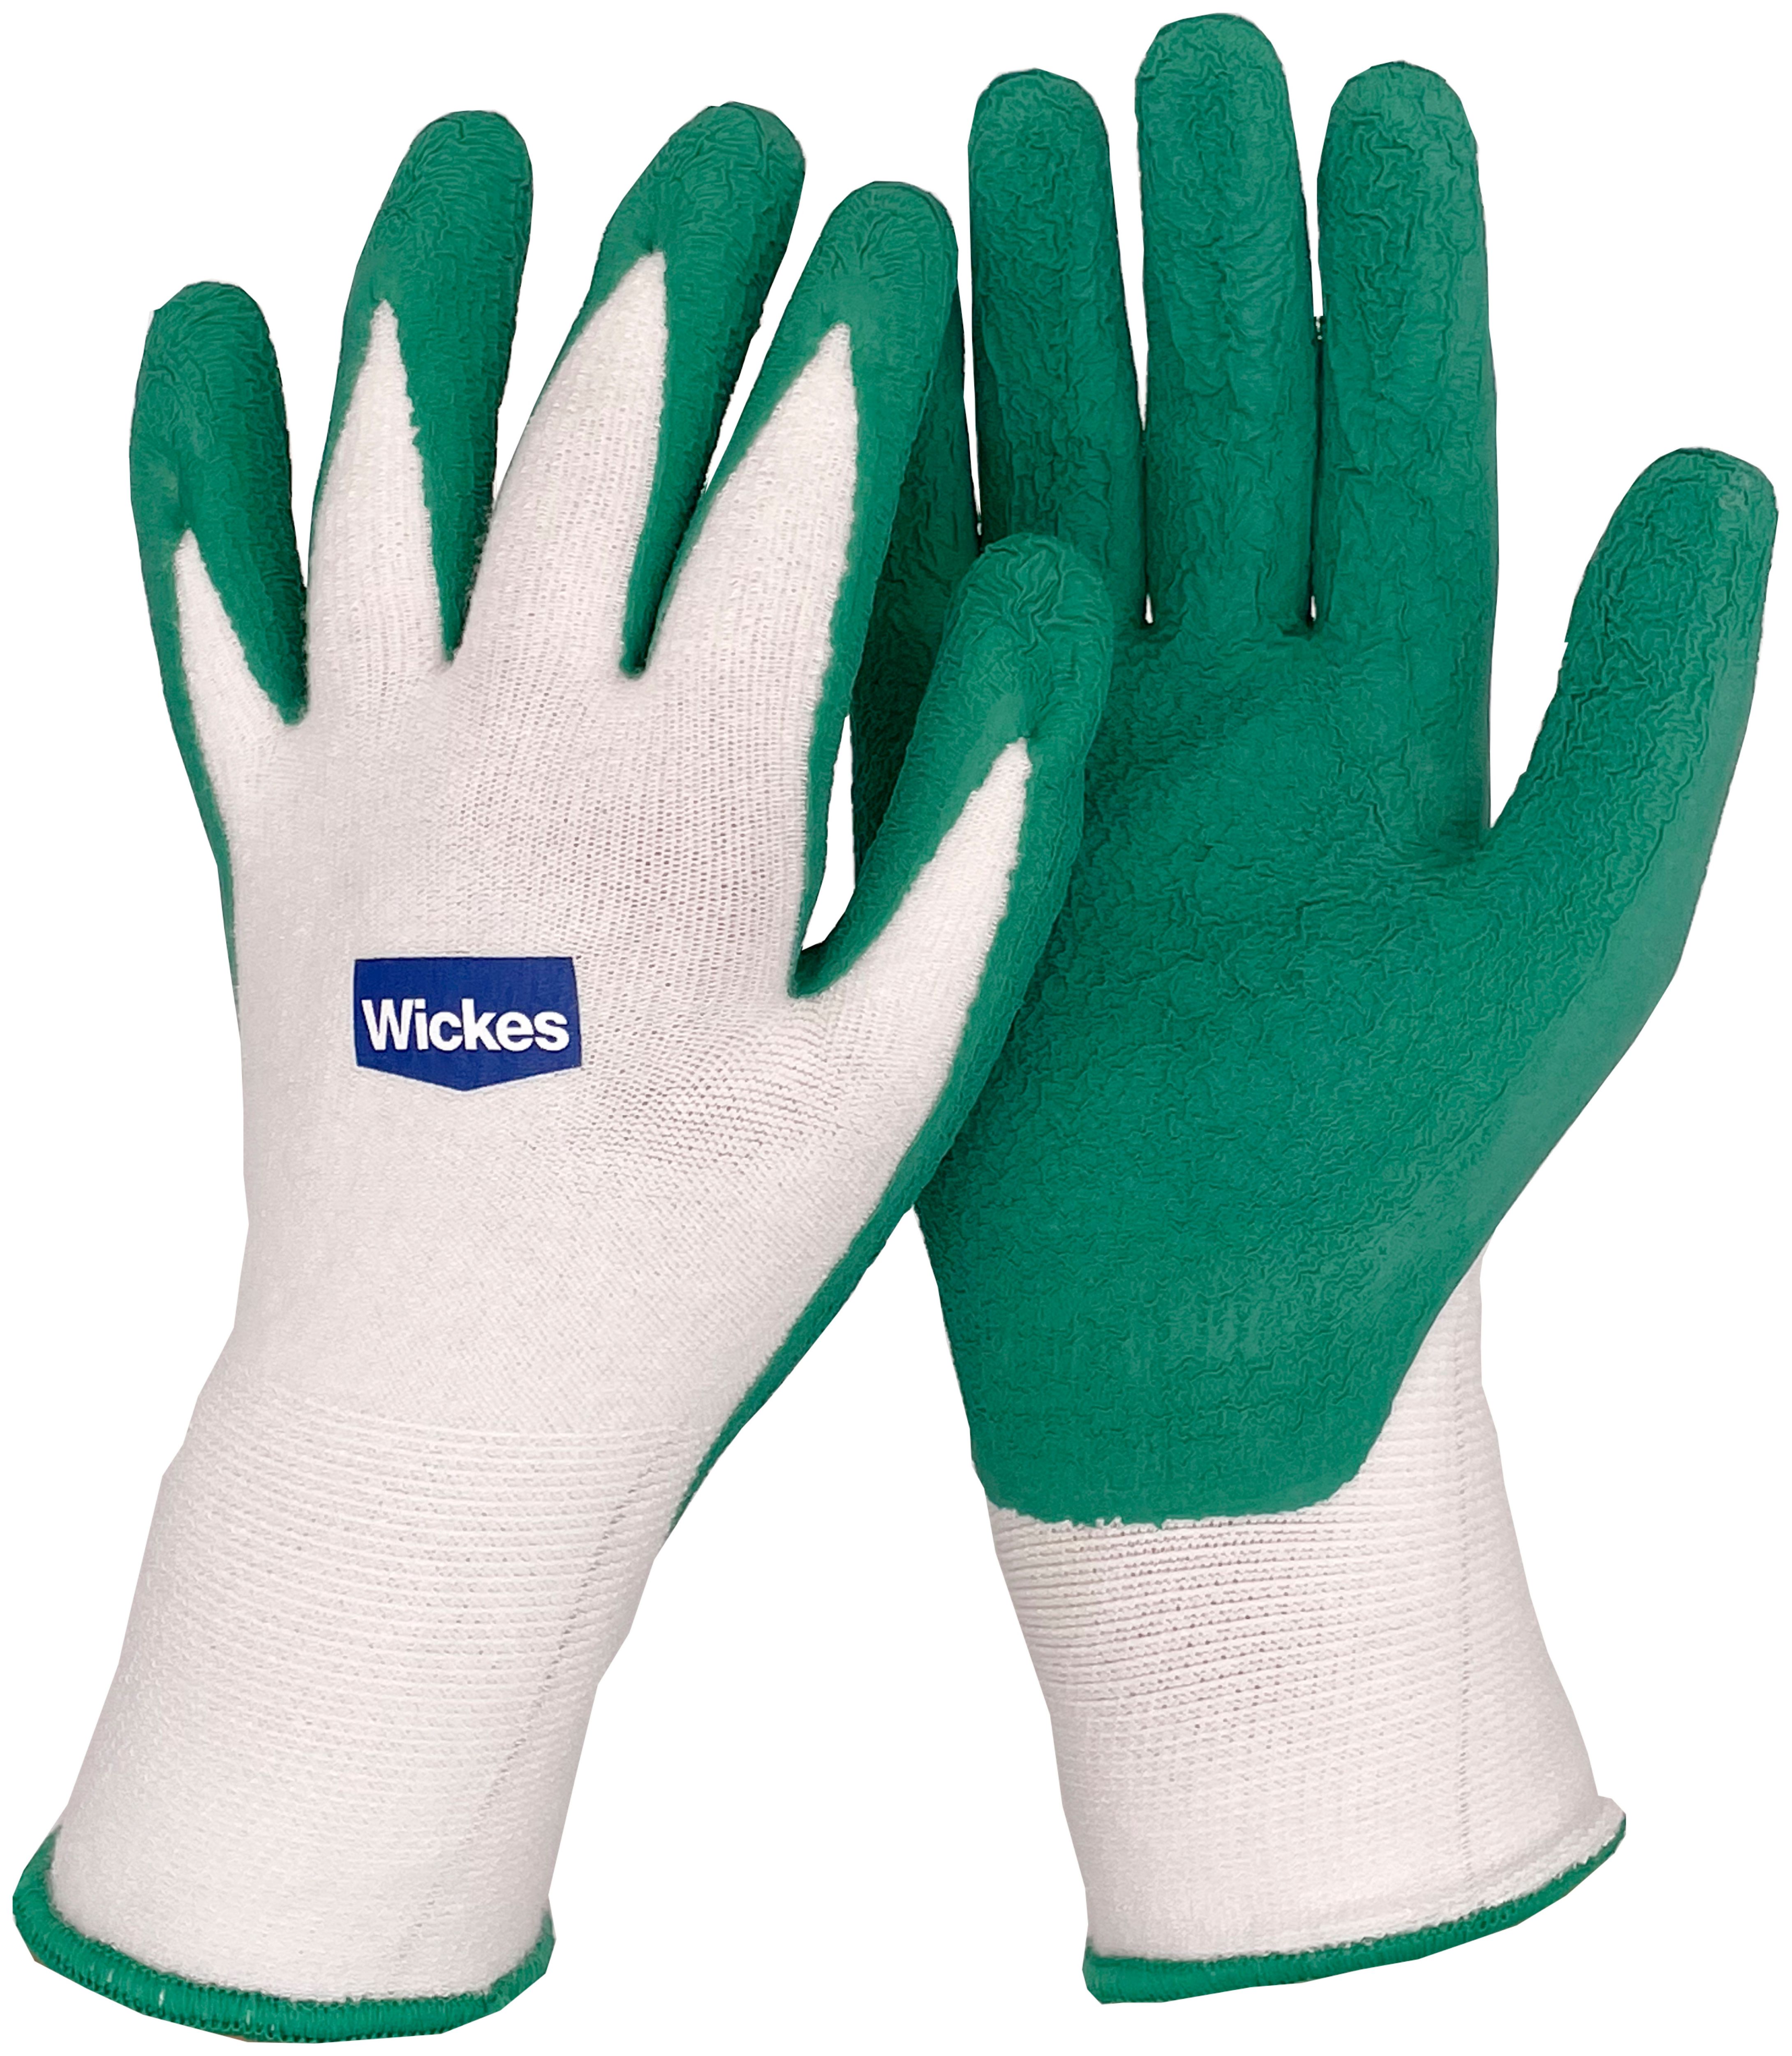 Wickes Bamboo Flexible Gardening Glove - Medium